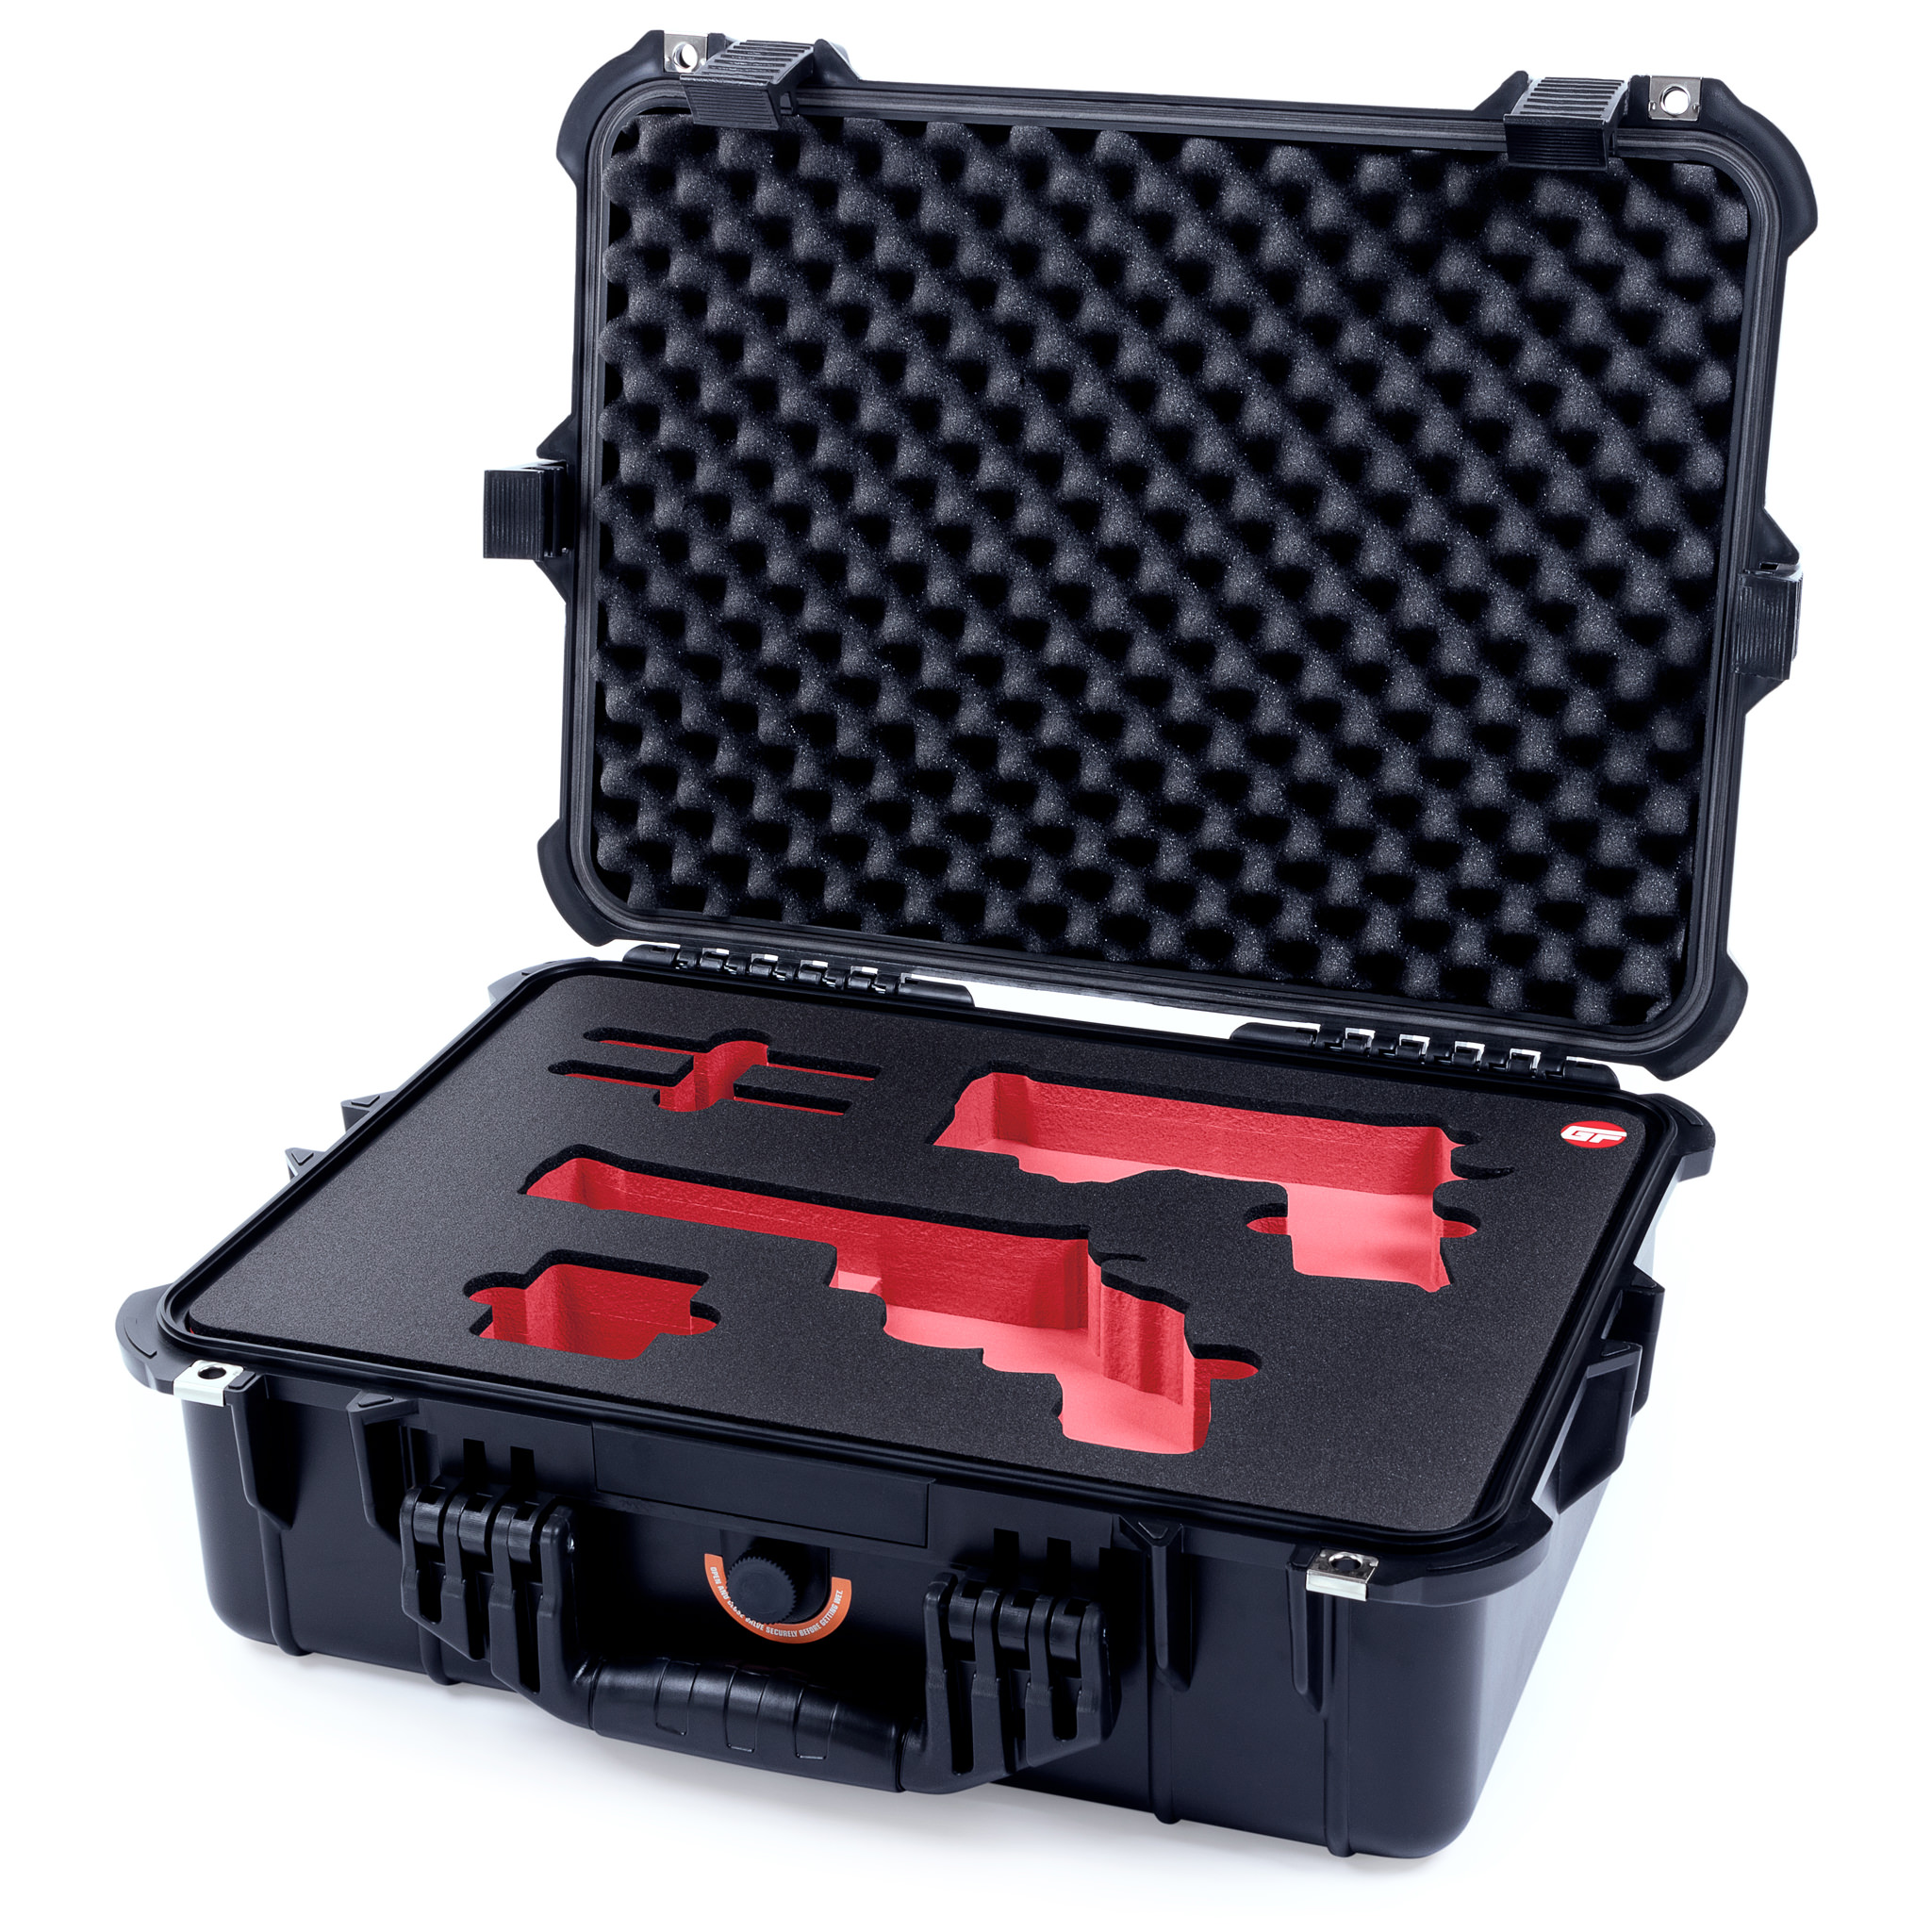  CVPKG 4 piece pluck replacement foam set for the Apache 4800  case. : Sports & Outdoors